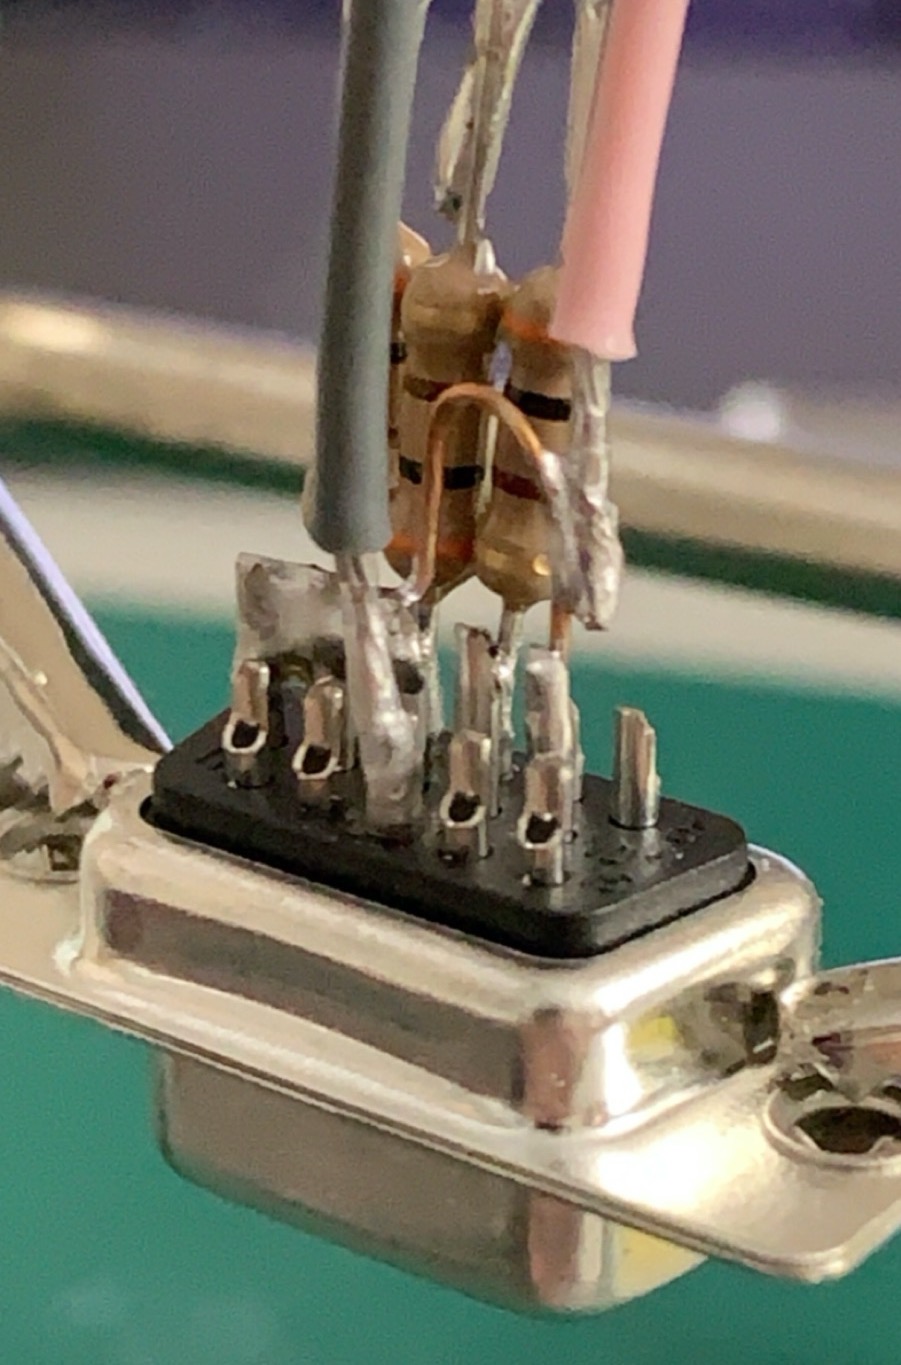 A close up of a terrible soldering job.